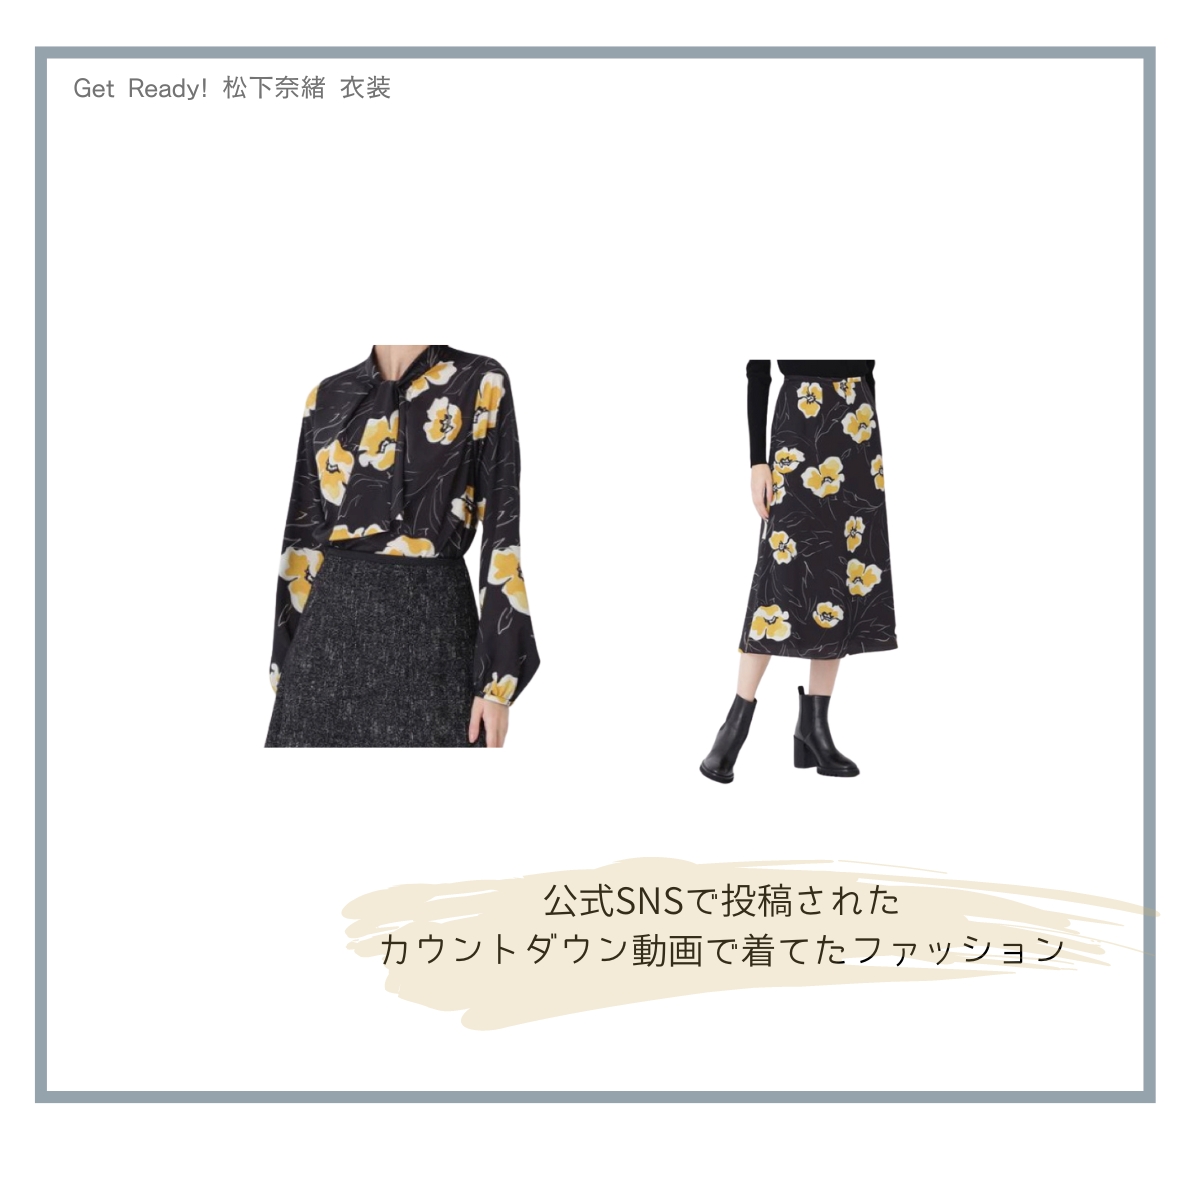 Get Ready(ゲットレディ) 松下奈緒 衣装公式SNSで投稿されたカウントダウン動画で着てたコーデ《ブラウス・スカート》